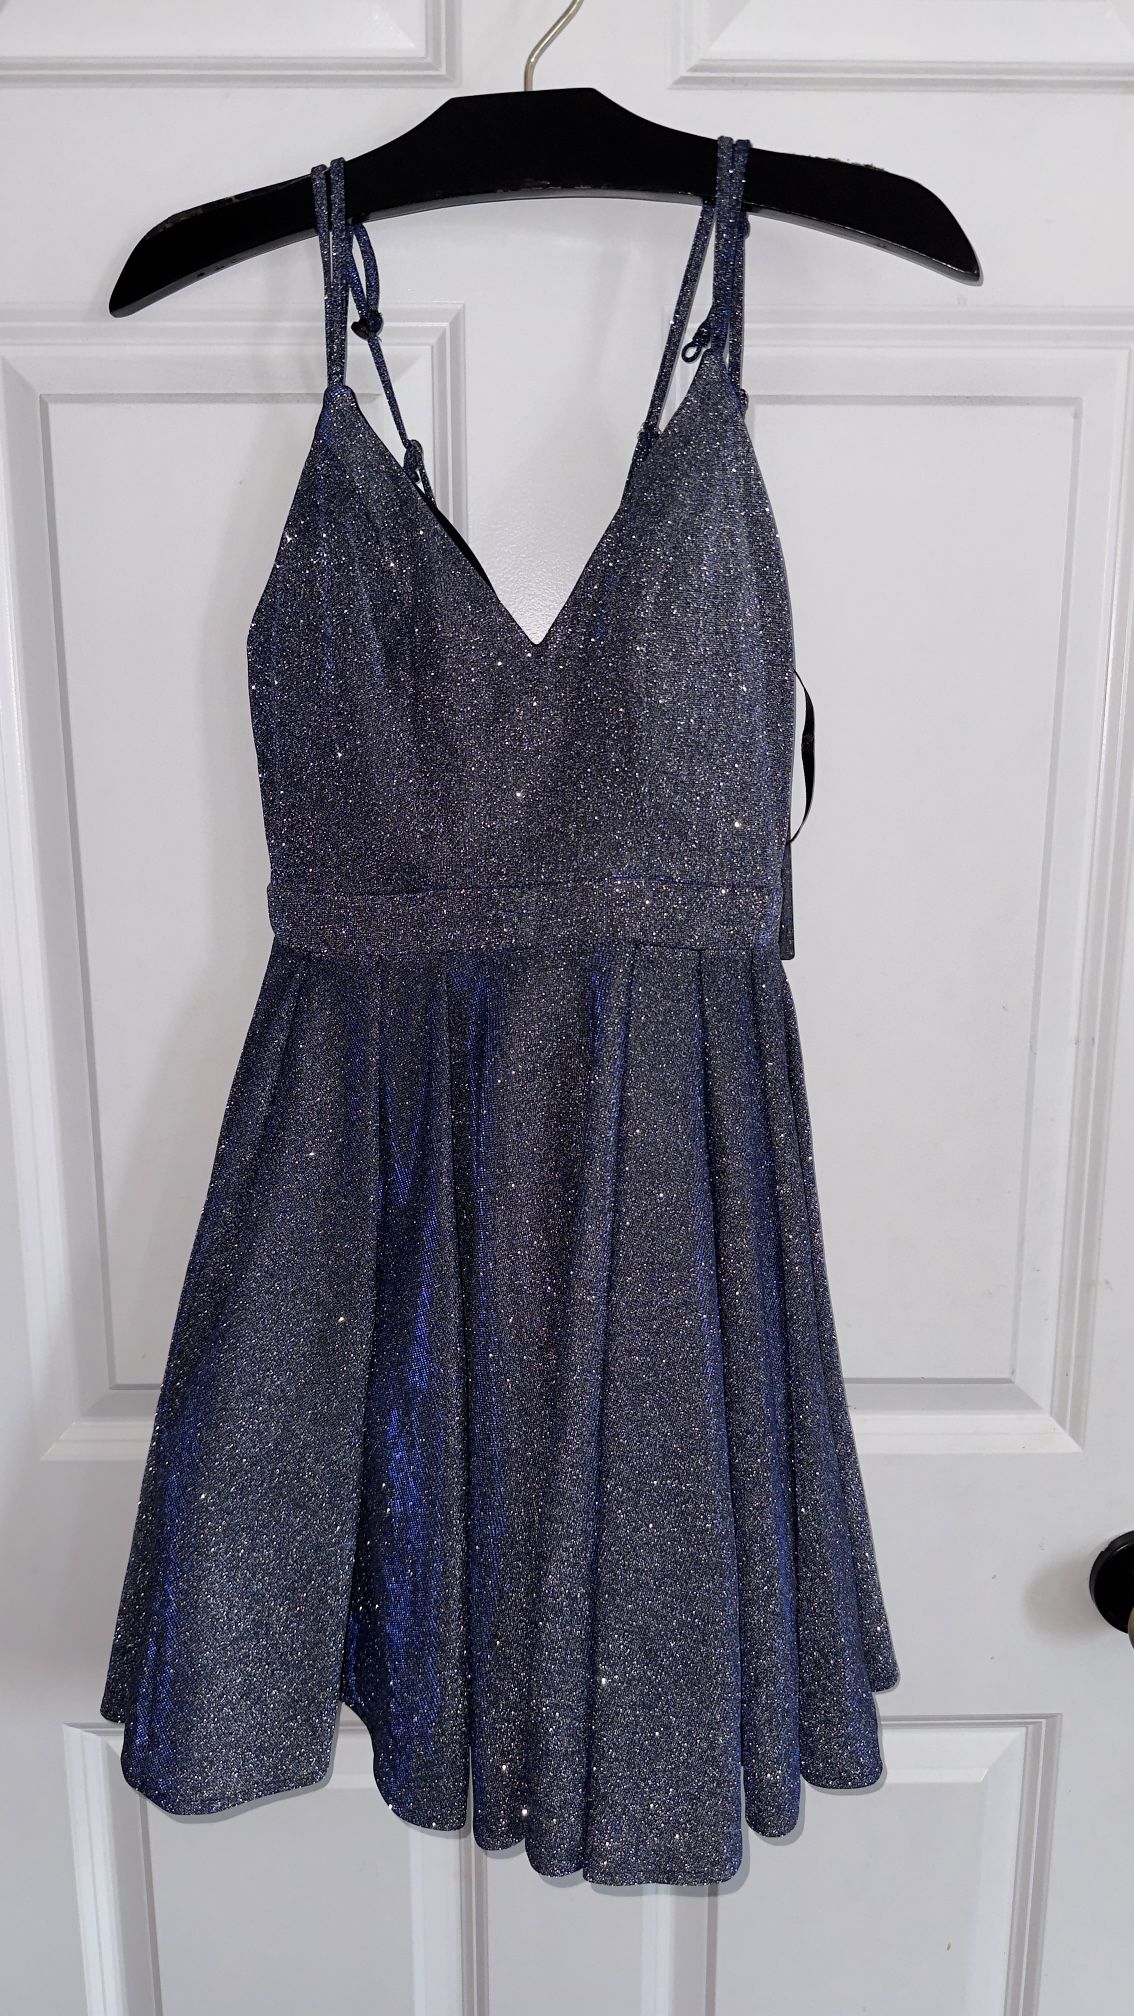 Sparkly Dress 👗 Size 0